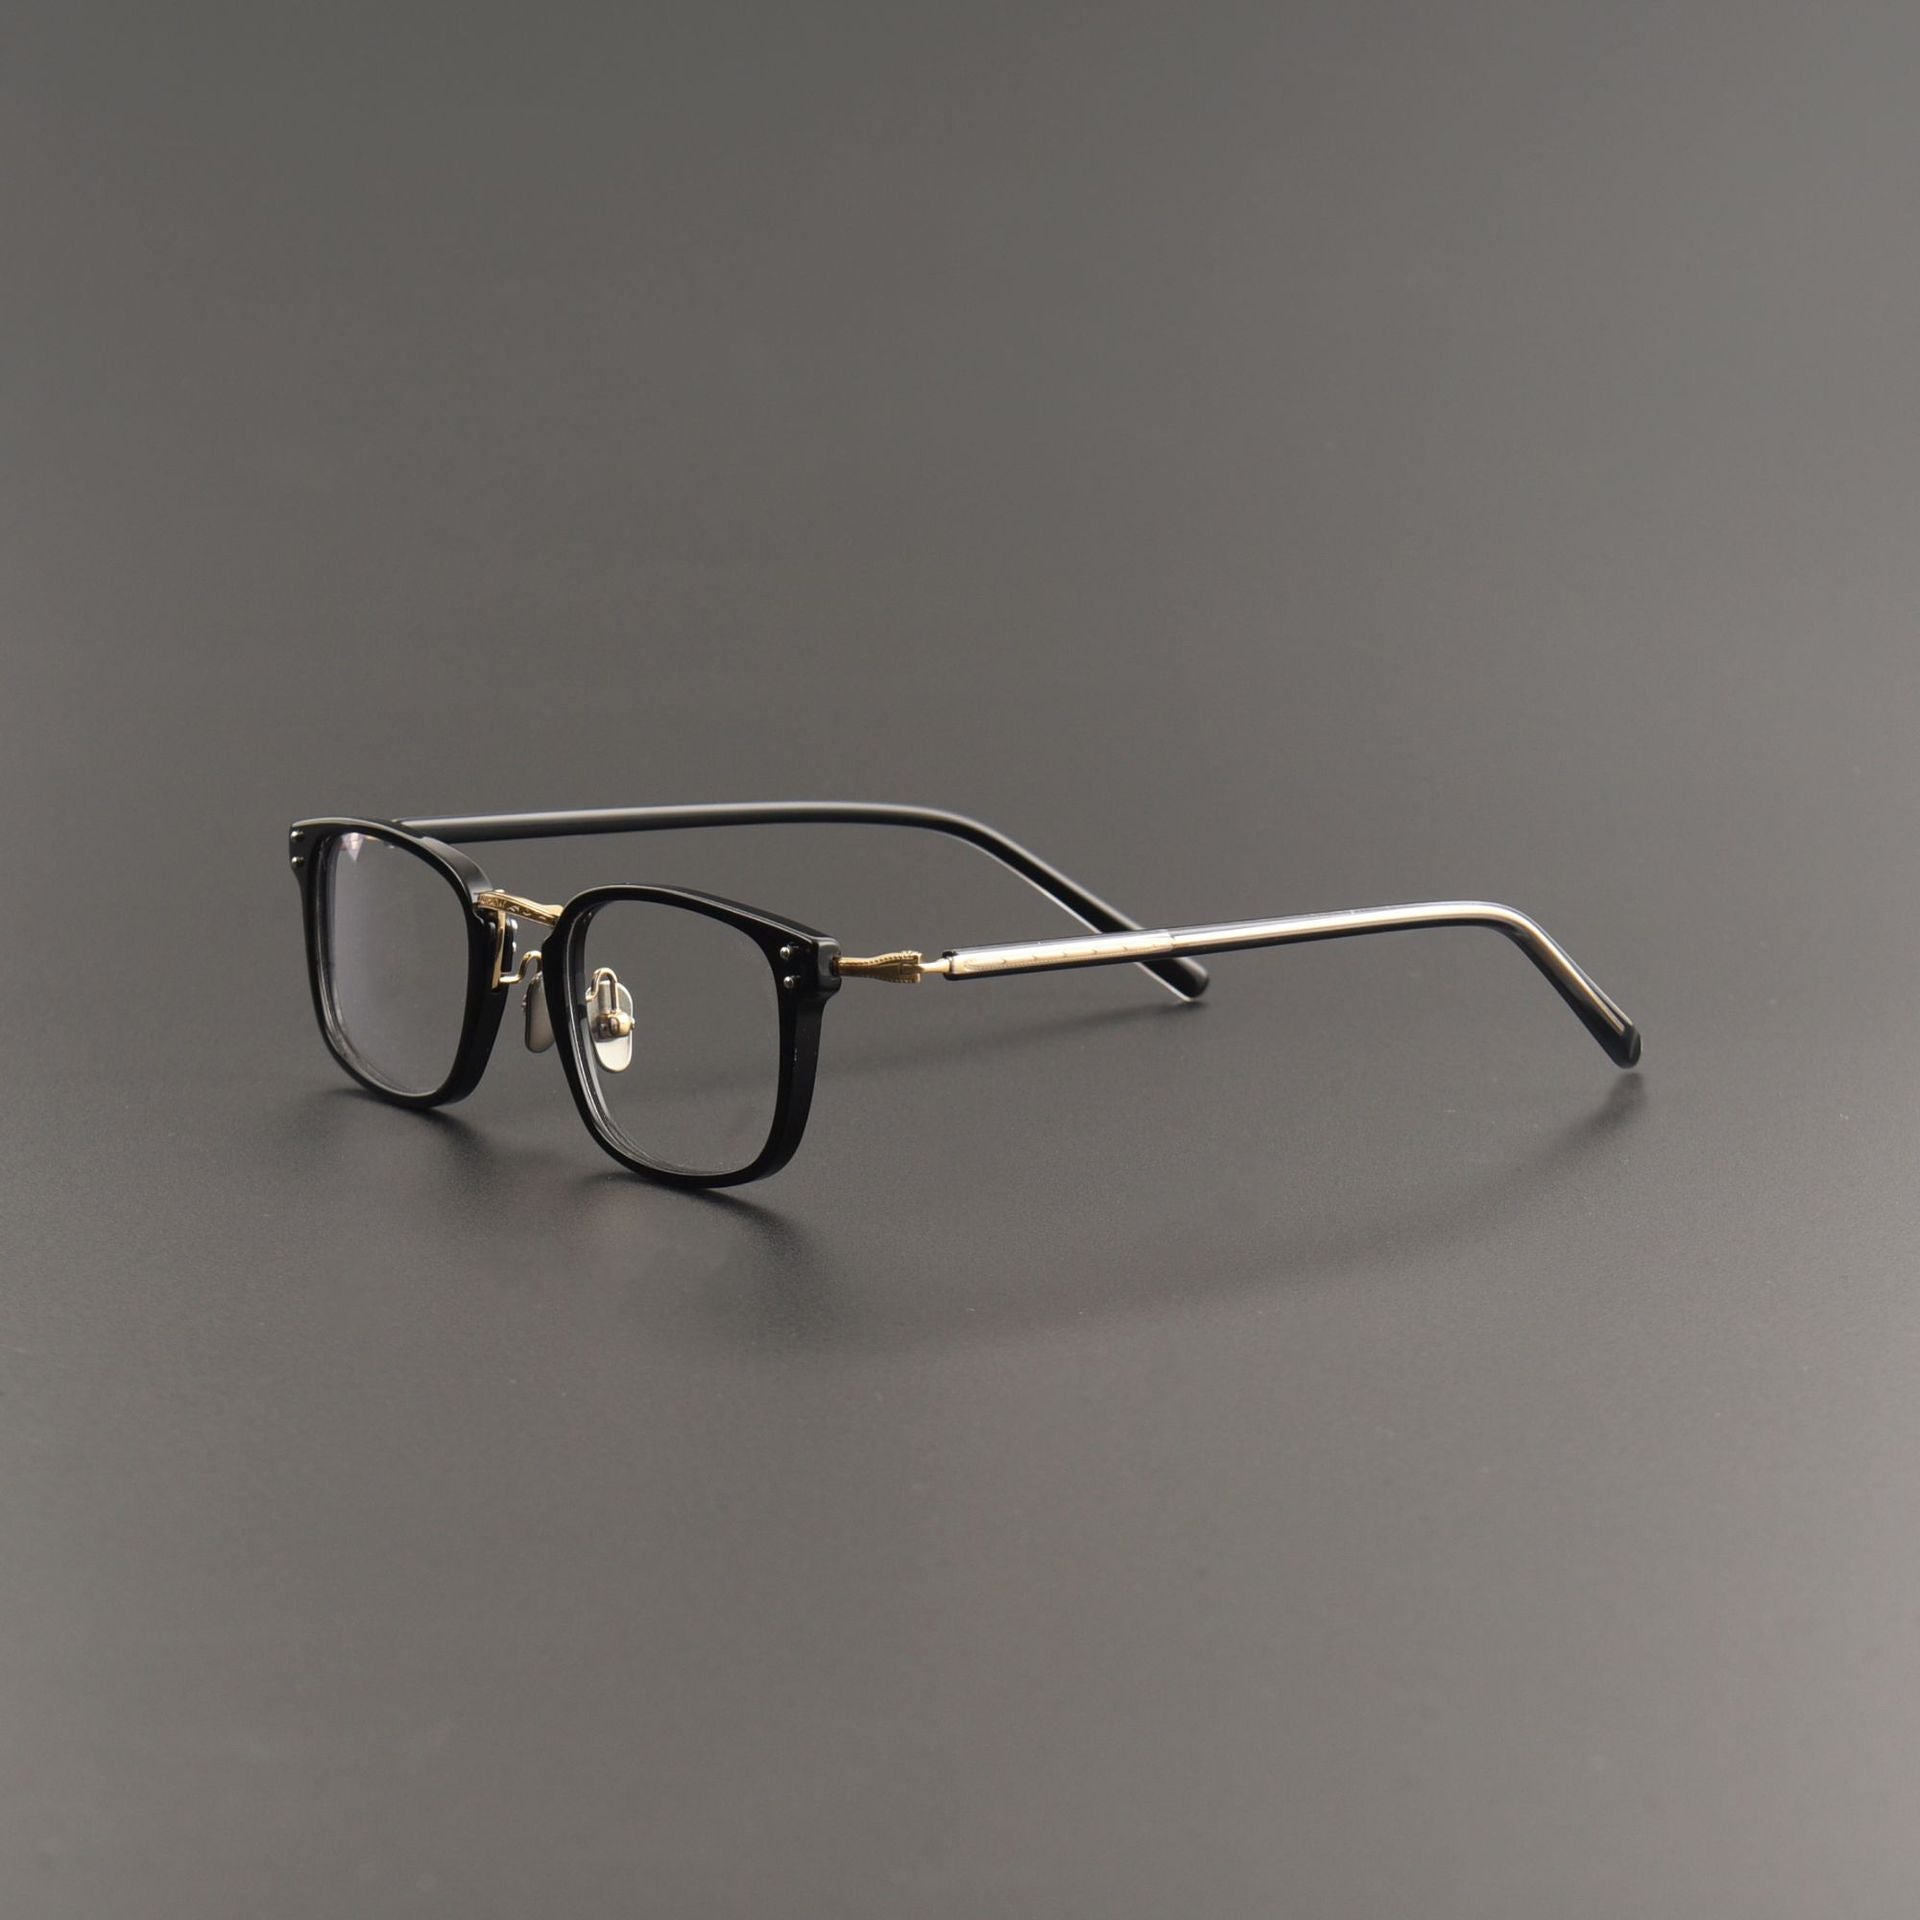 Rehse Retro Classic Small Square Glasses Frame